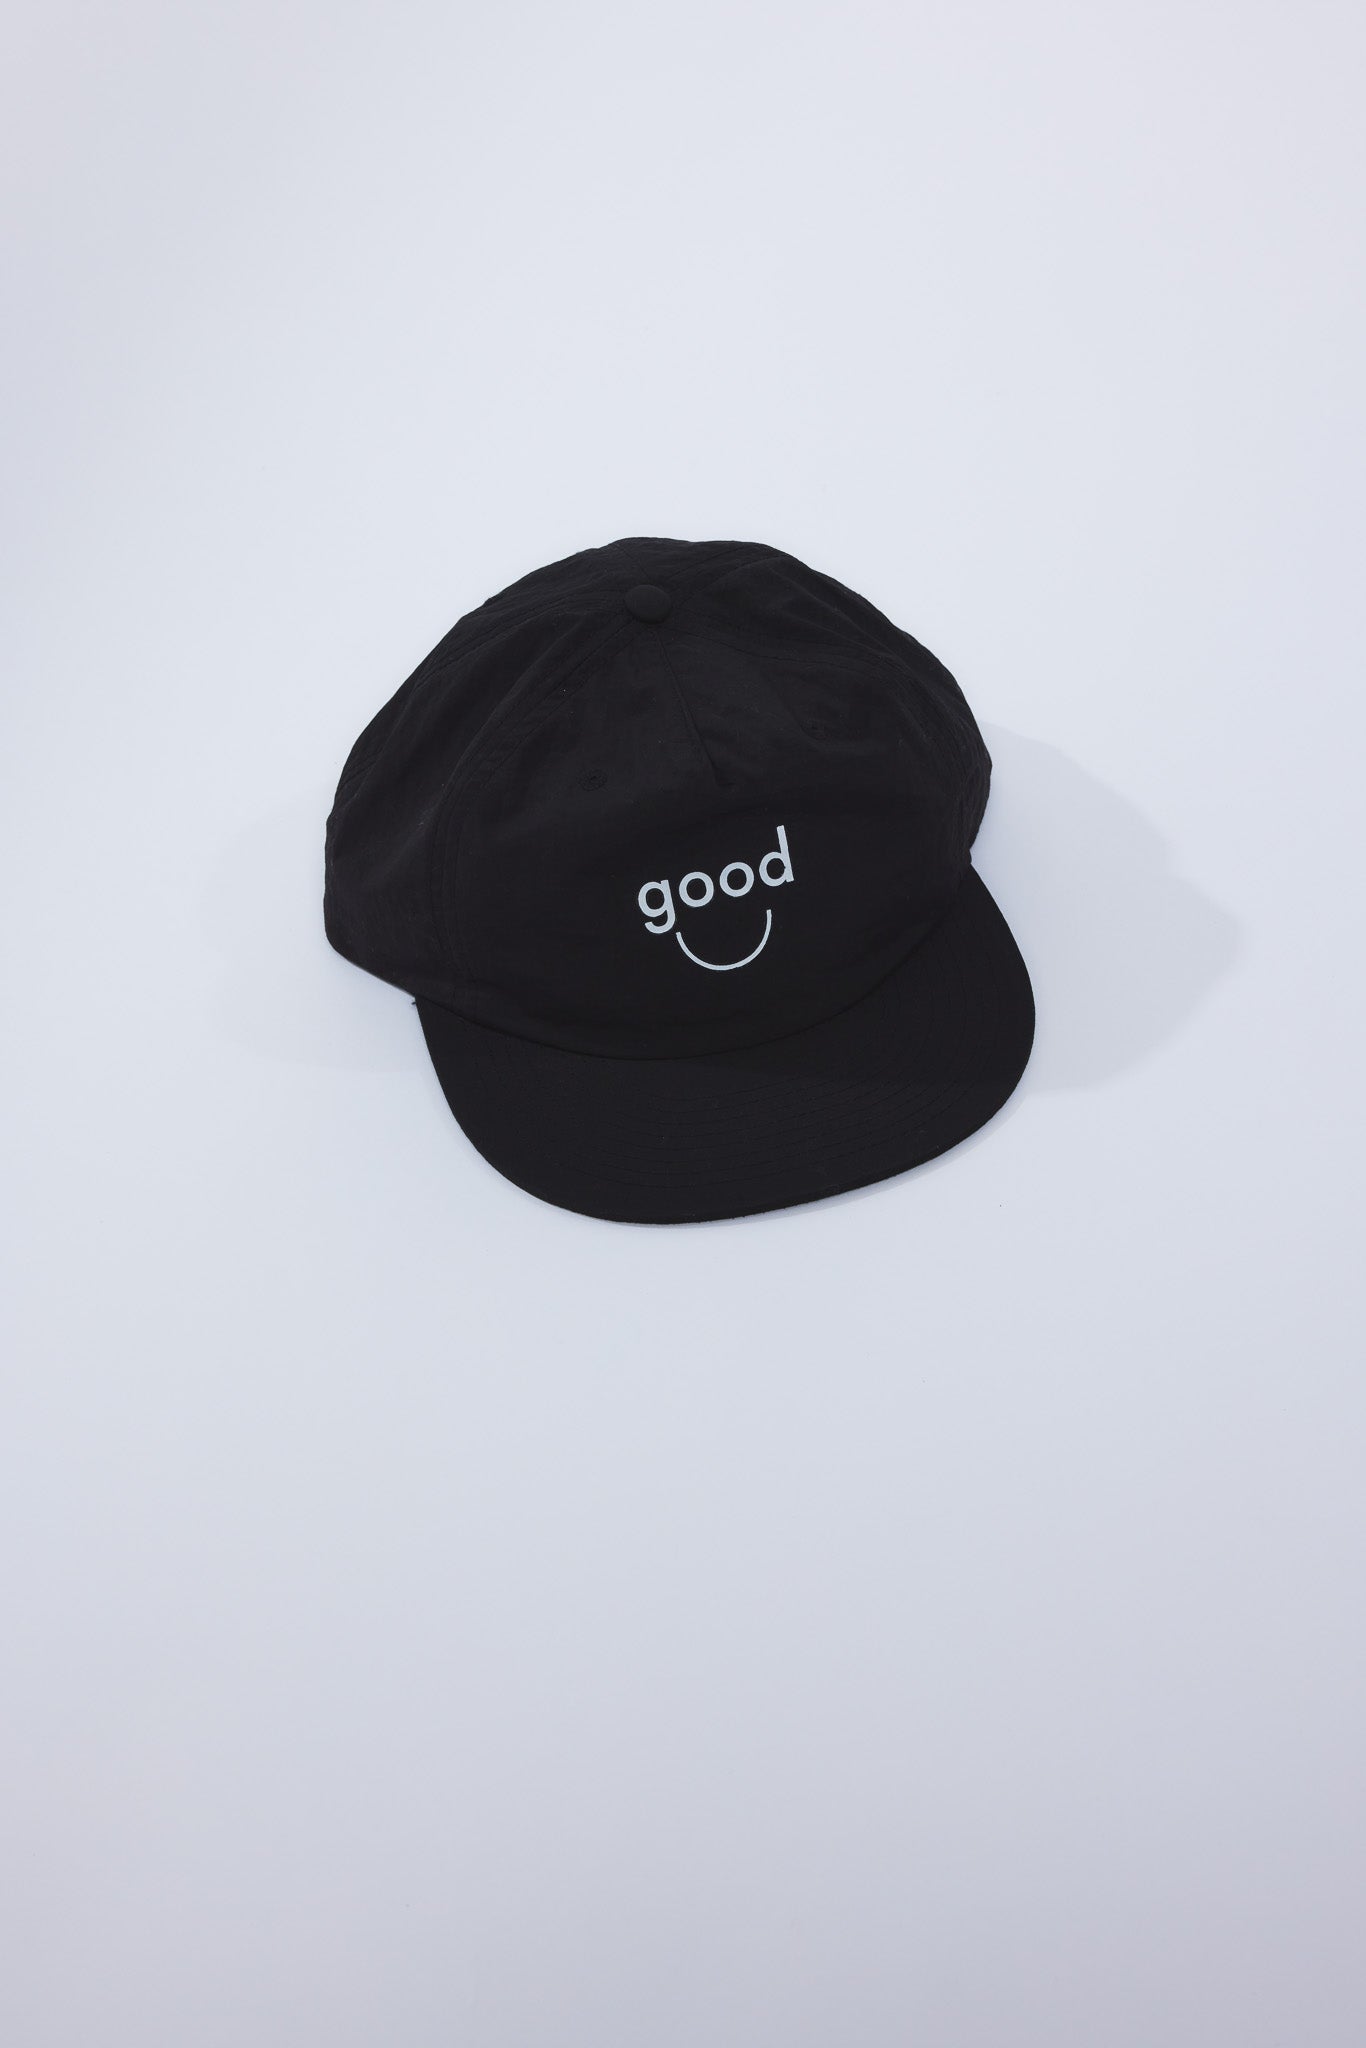 Good Hat - The Good Human Factory